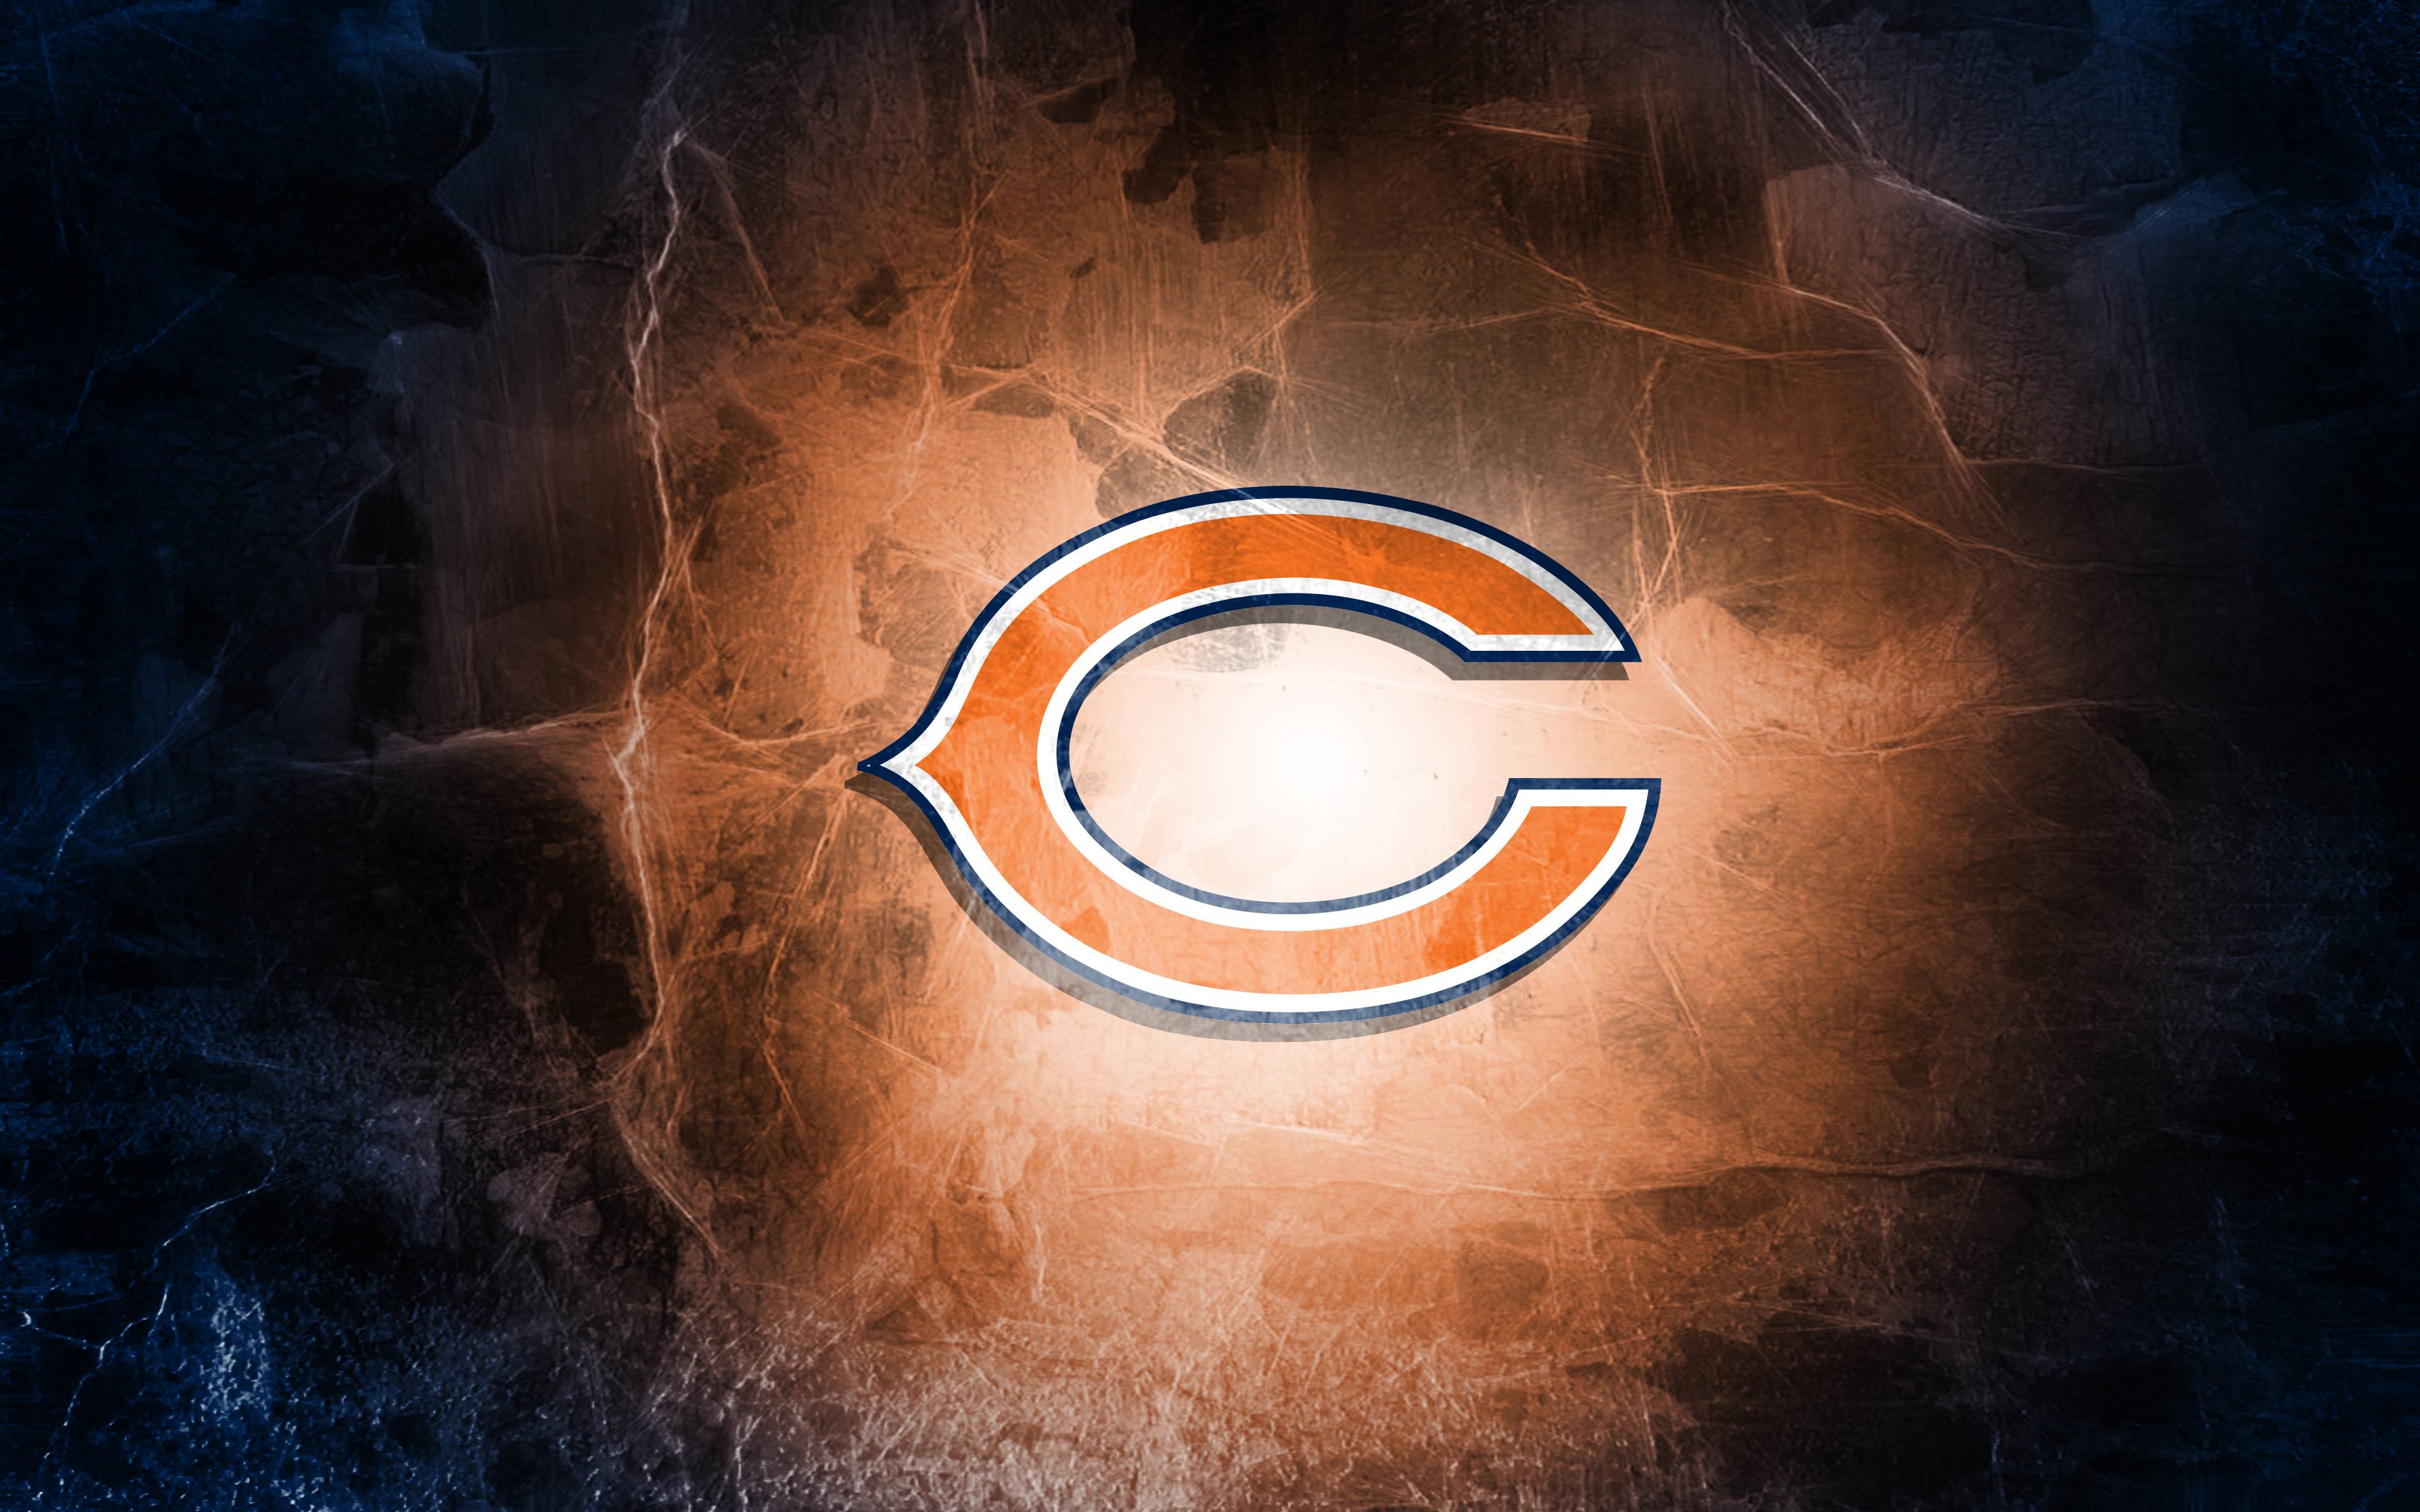 Chicago Bears Desktop Wallpaper